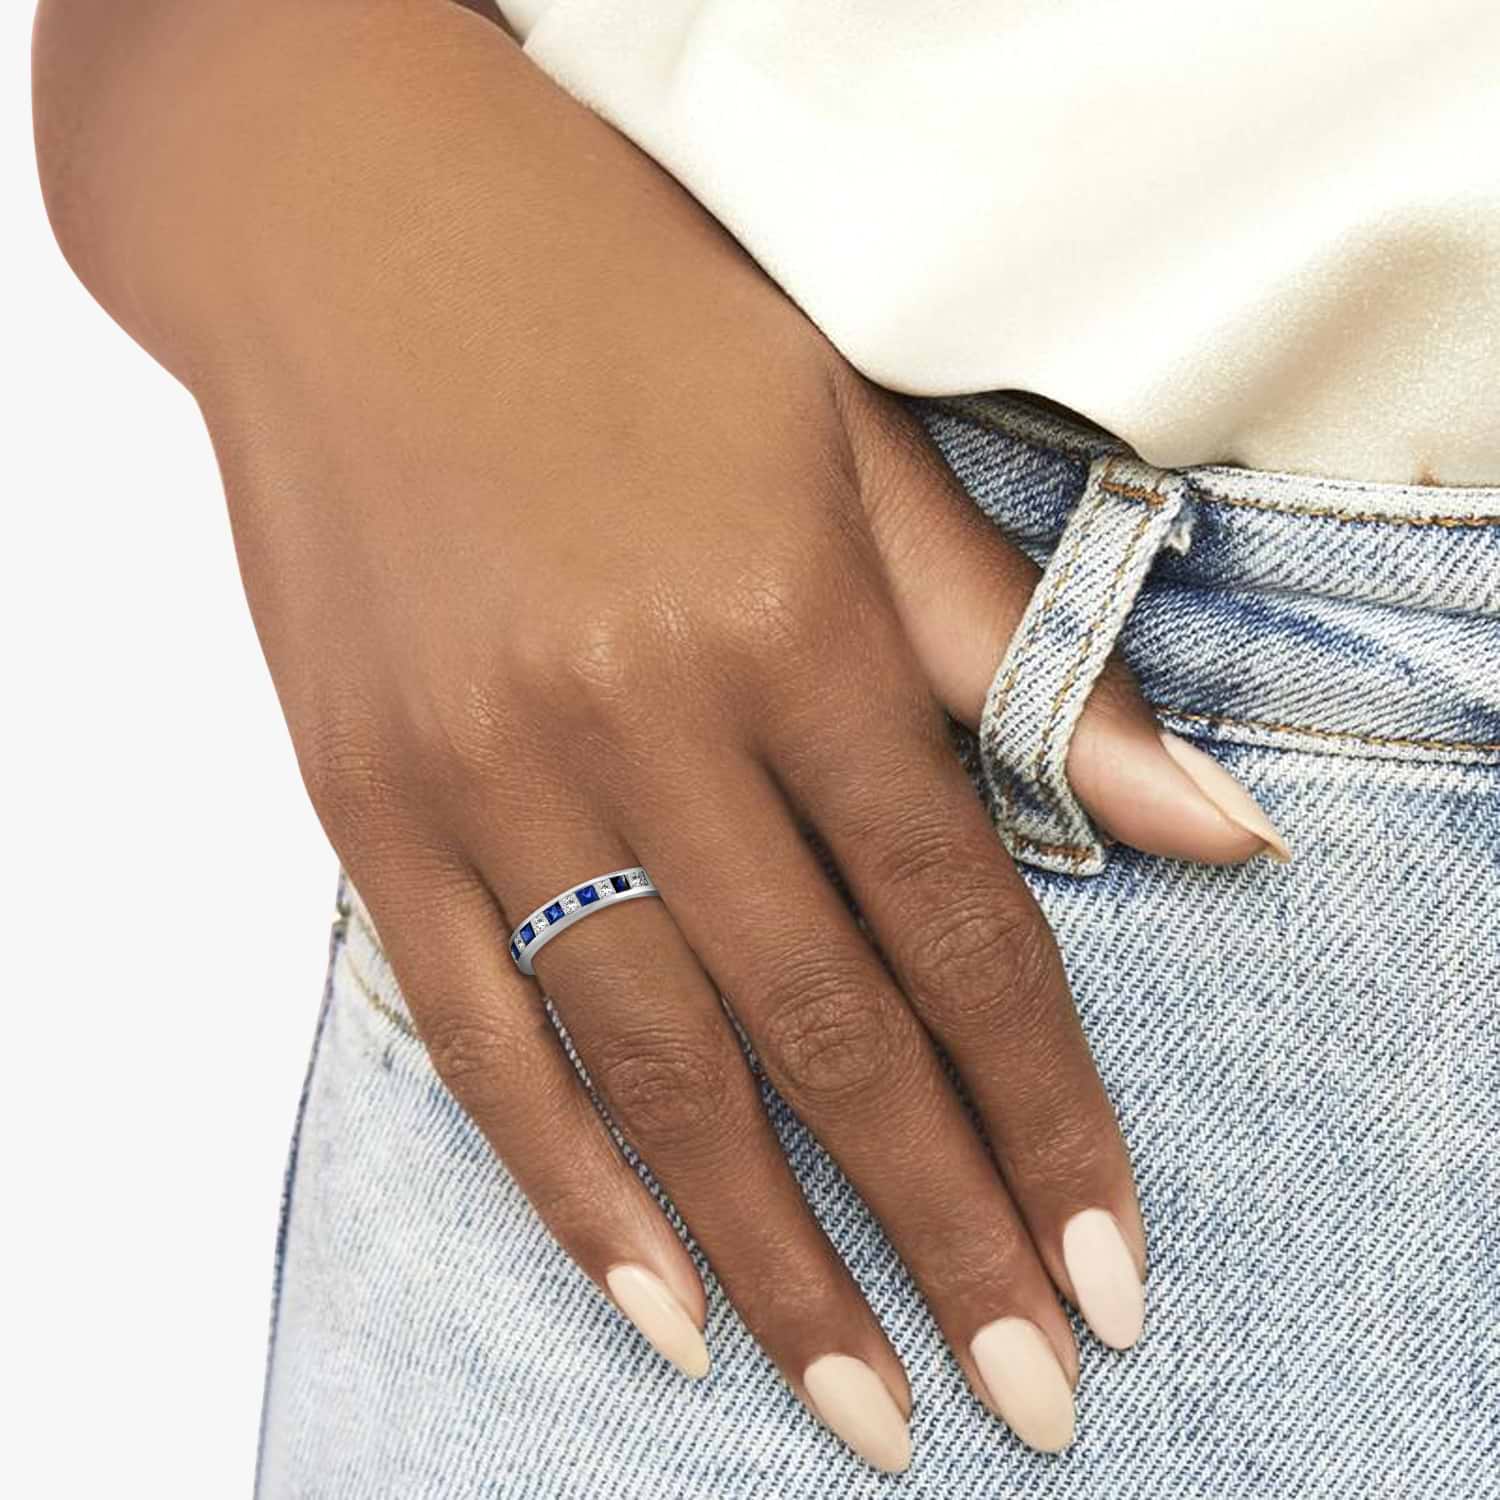 Princess-Cut Channel-Set Diamond & Sapphire Ring Band 14k White Gold